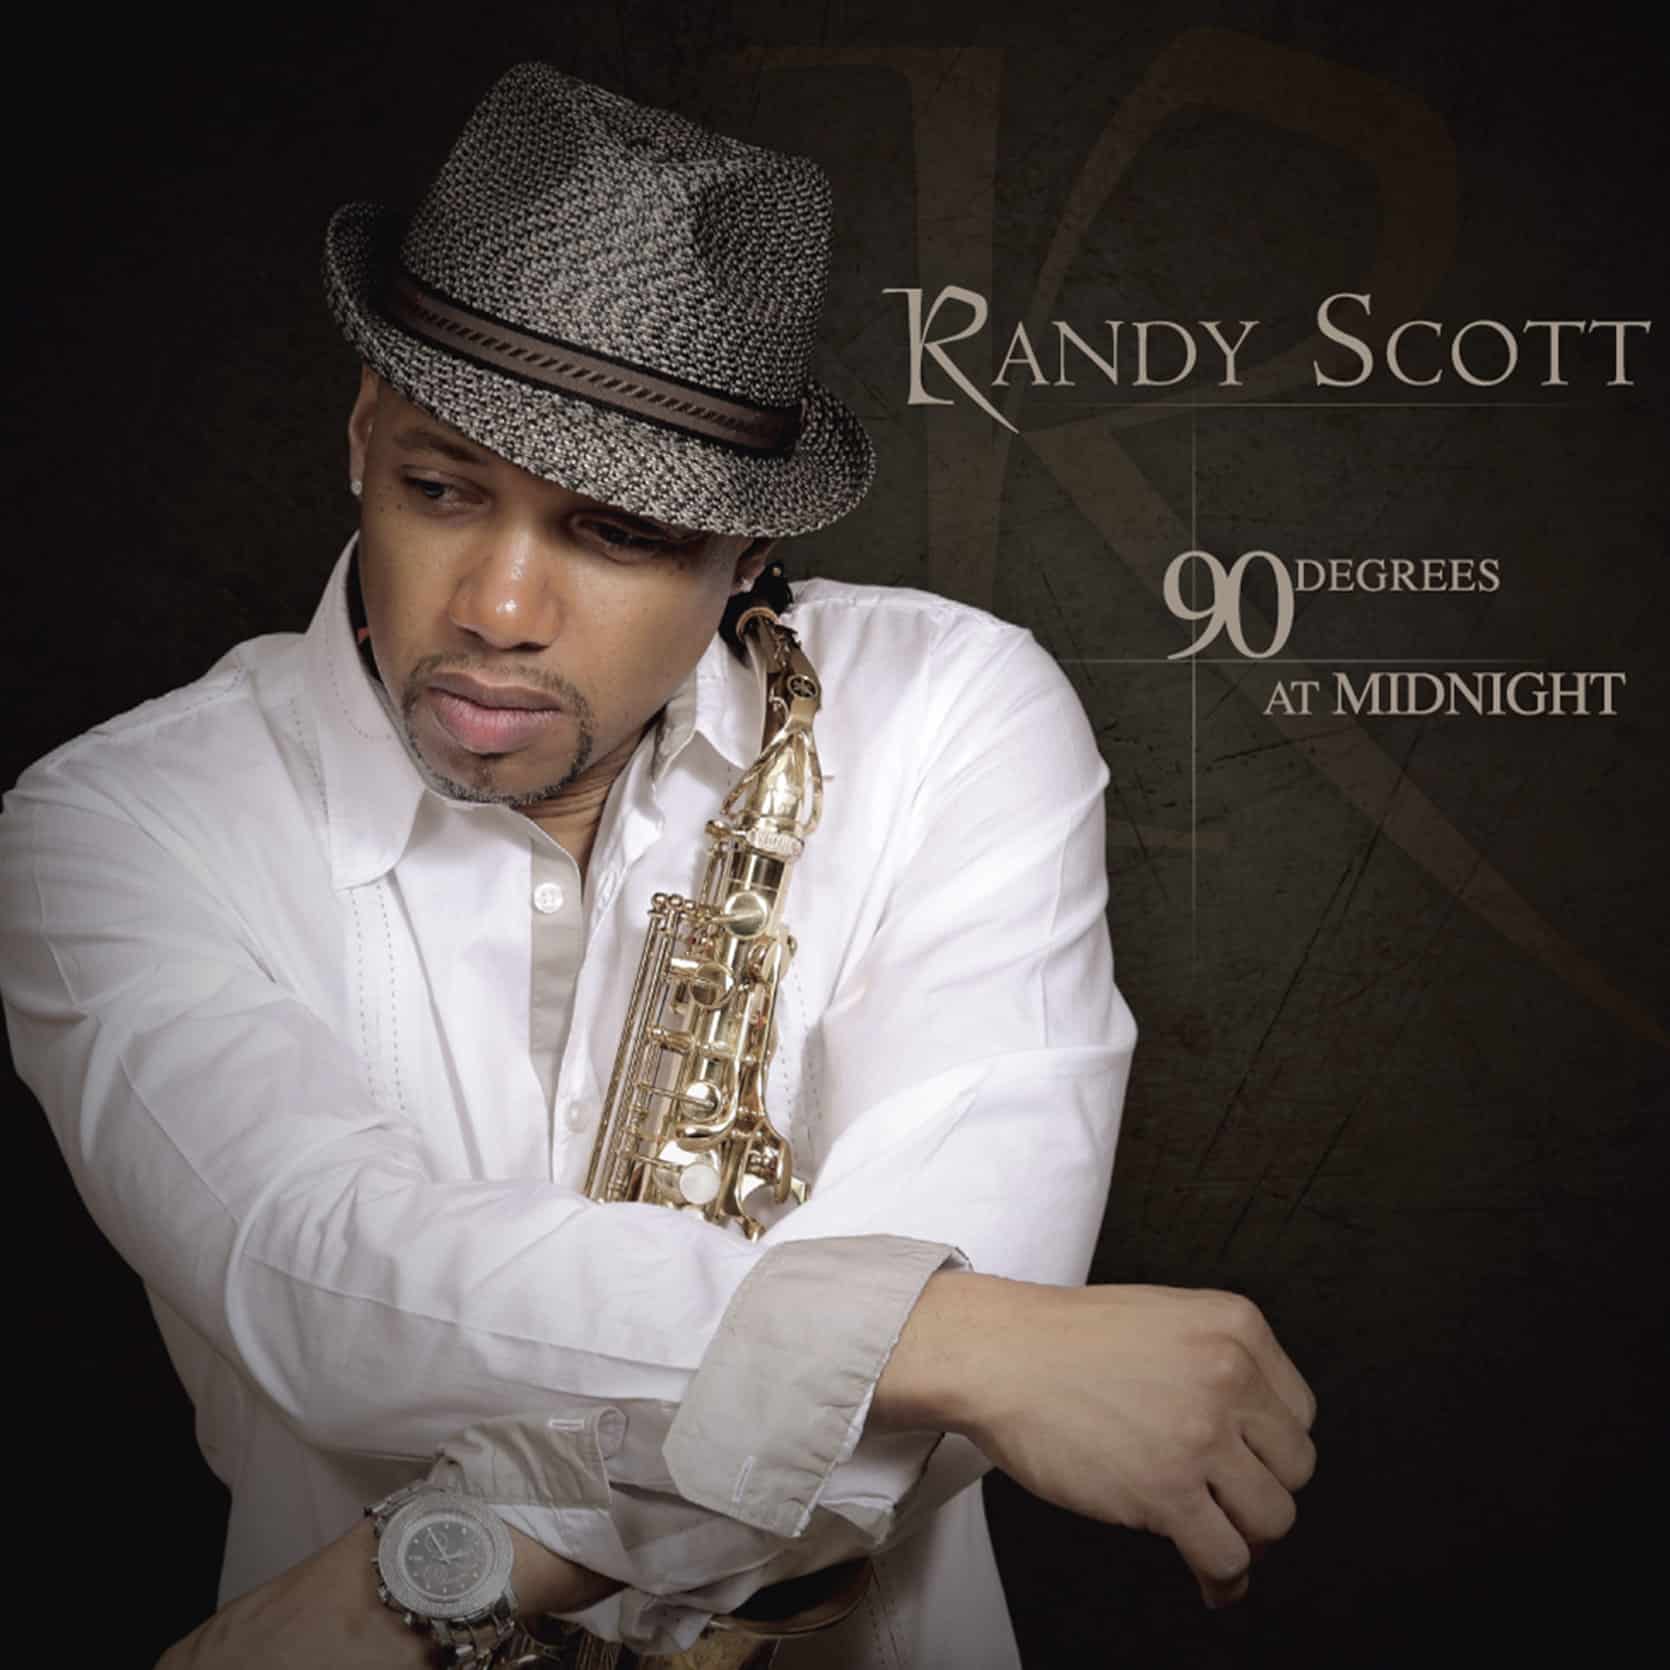 Listen to 90 Degrees at Midnight by Smooth Jazz recording artist Randy Scott